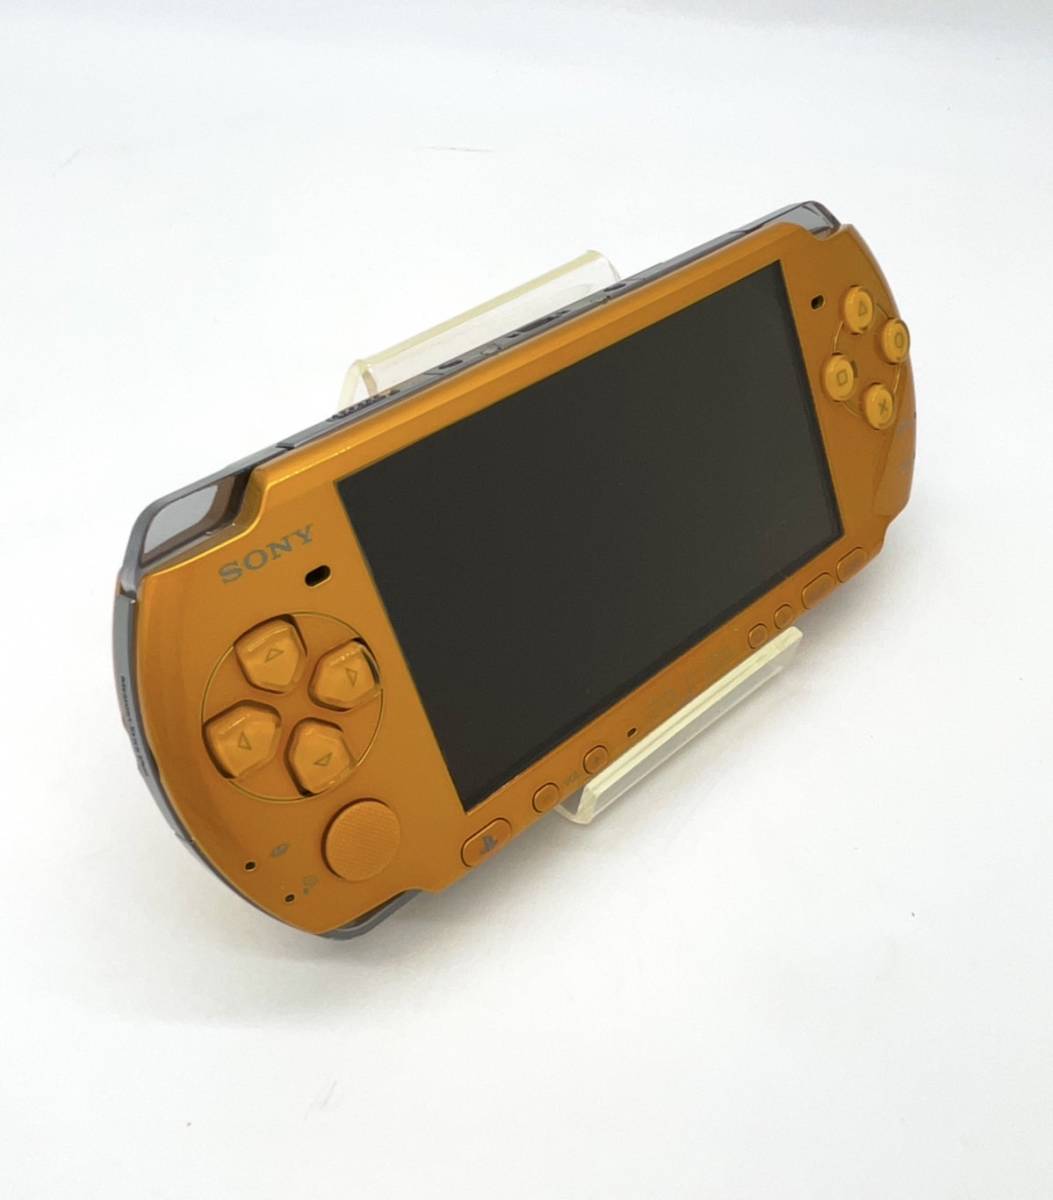 PSP「プレイステーション・ポータブル」 バリュー・パック ブライト・イエロー (PSPJ-30003) 【メーカー生産終了】【極美品】 